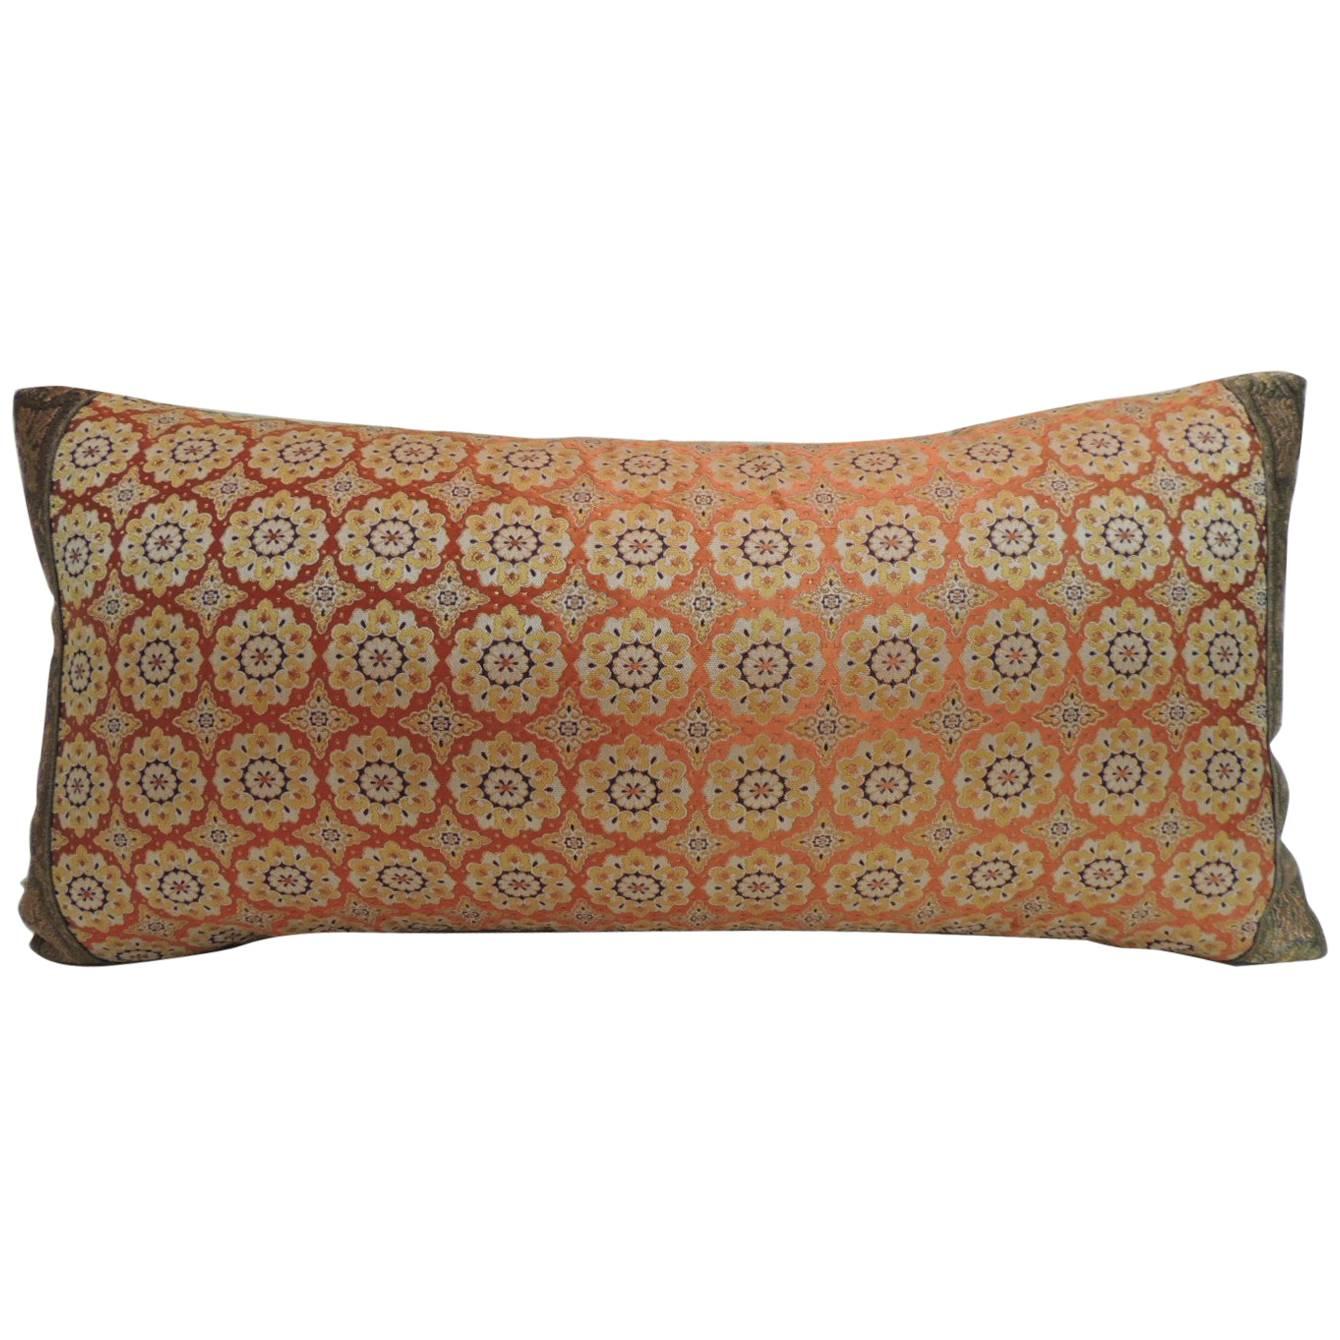 Vintage Asian Obi Silk Woven Embroidery Bolster Decorative Pillow